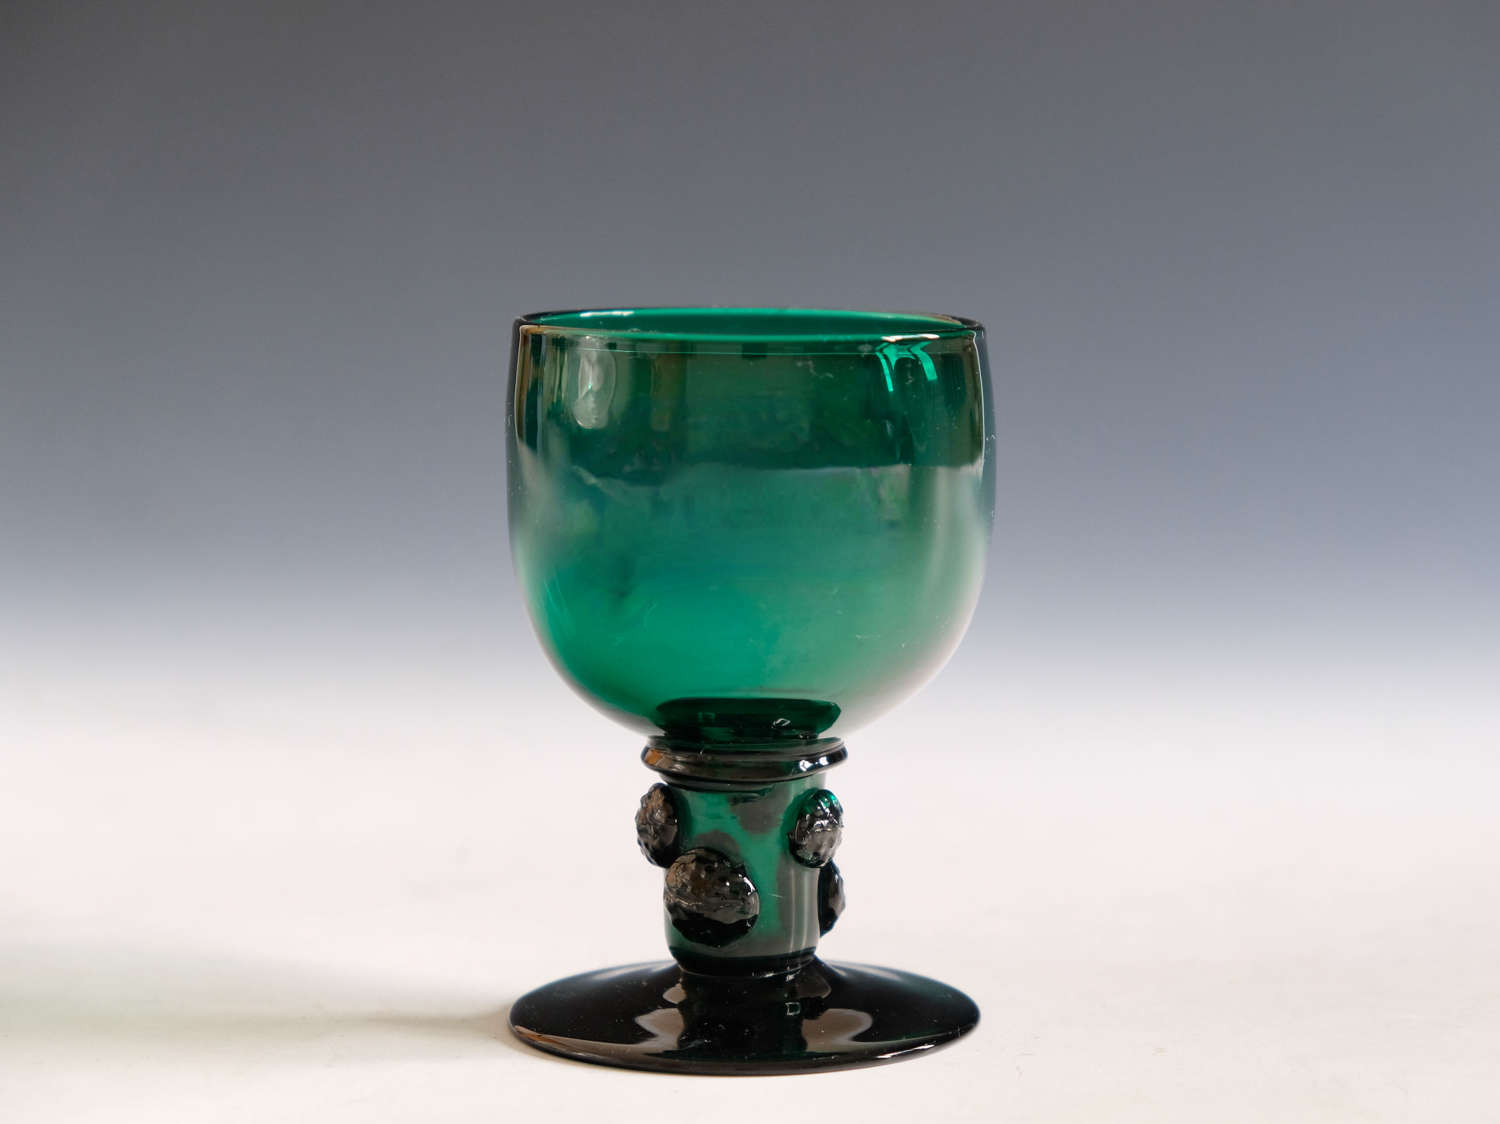 Antique glass - green wine glass English c1830